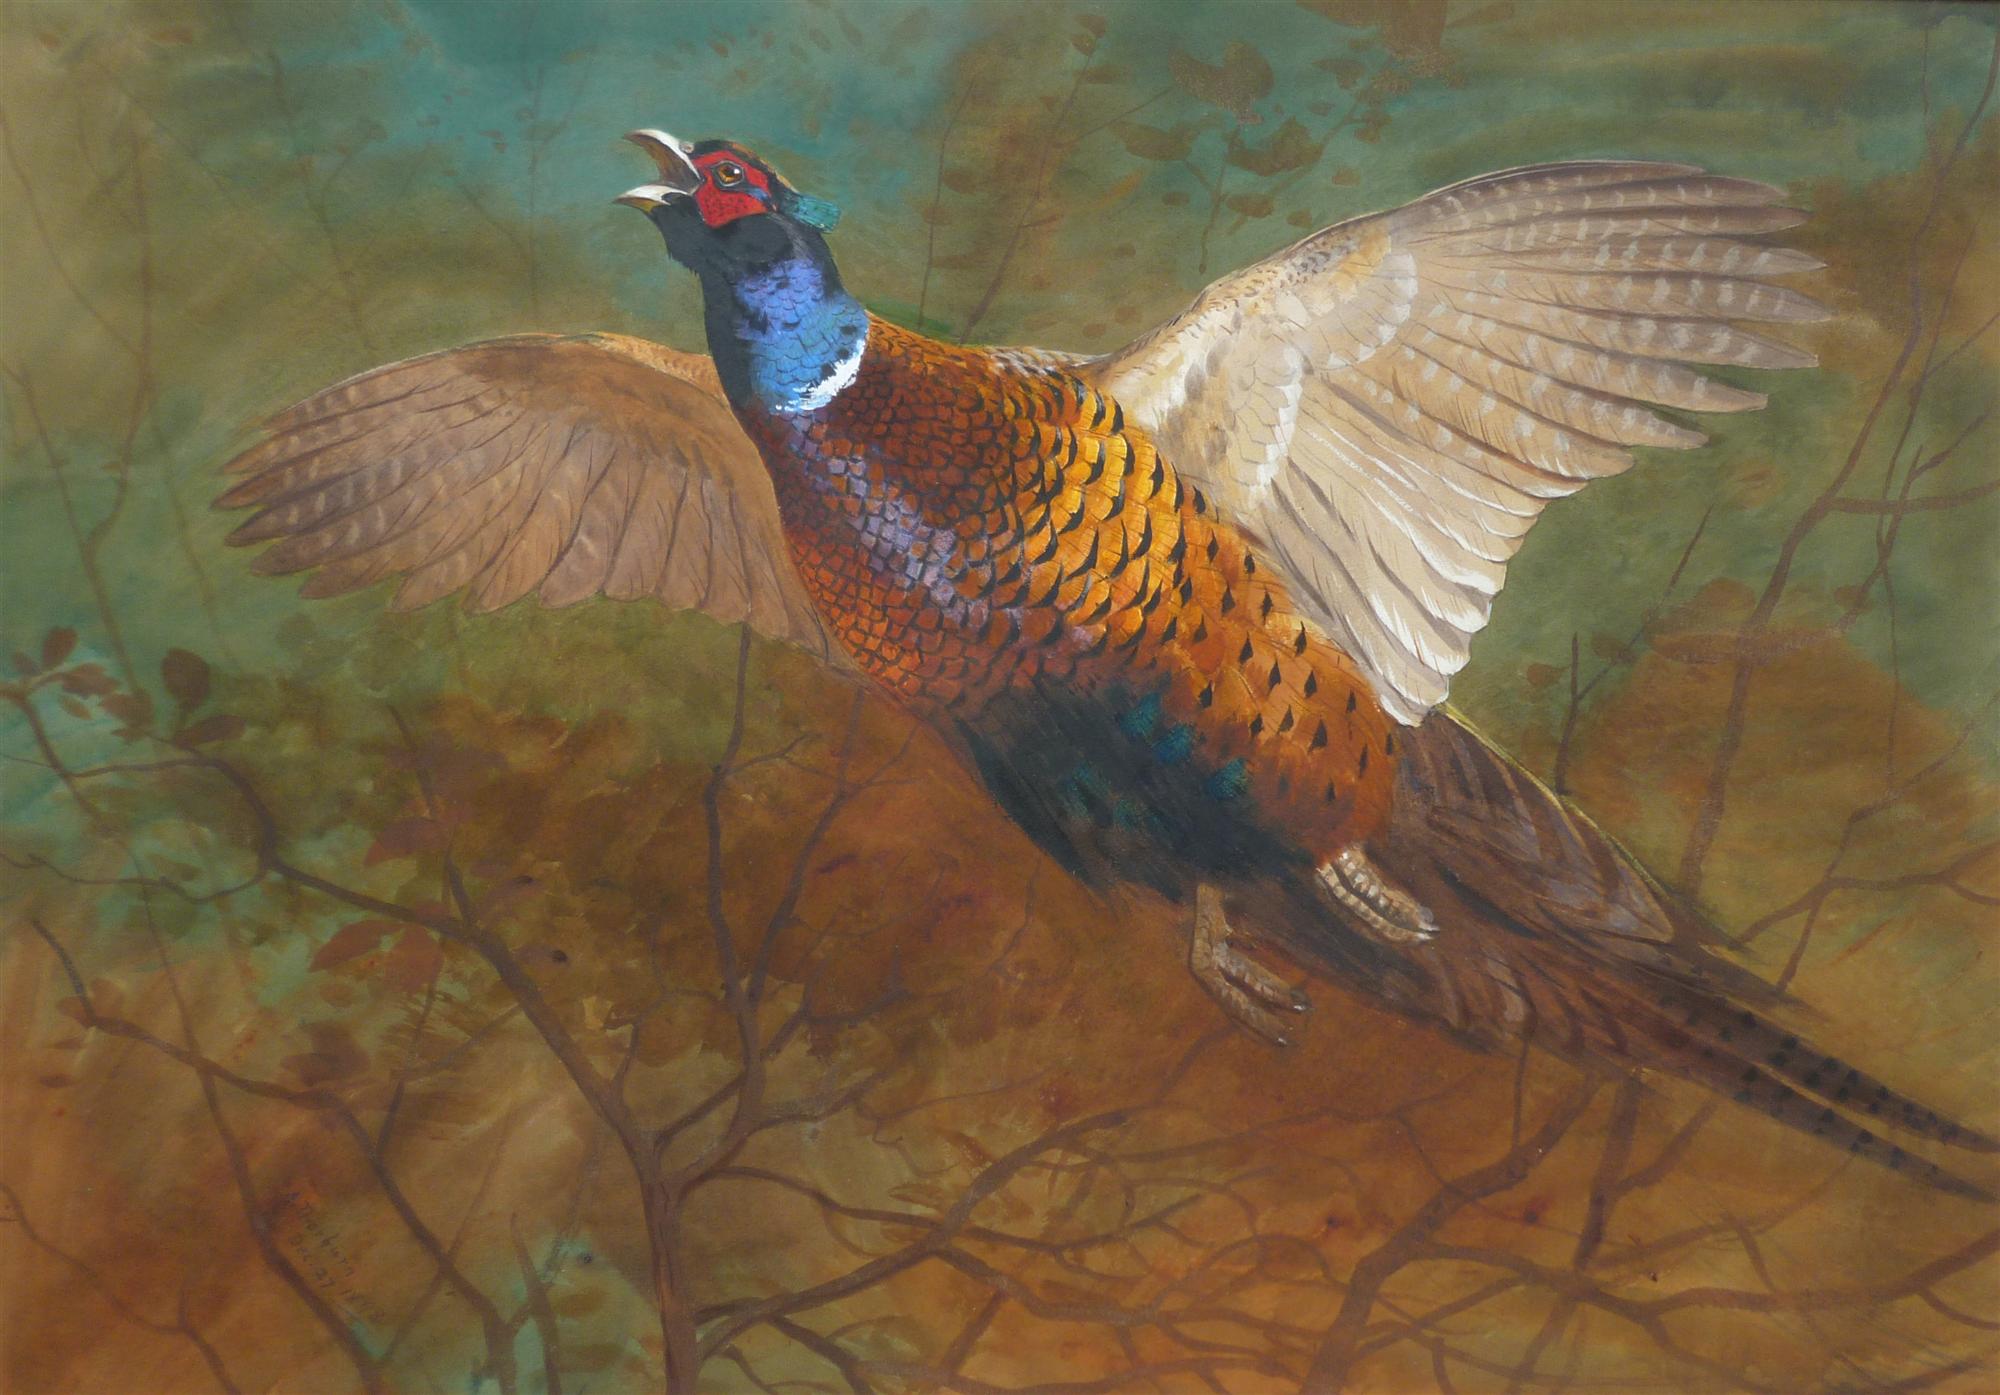 Archibald Thorburn | Cock Pheasant